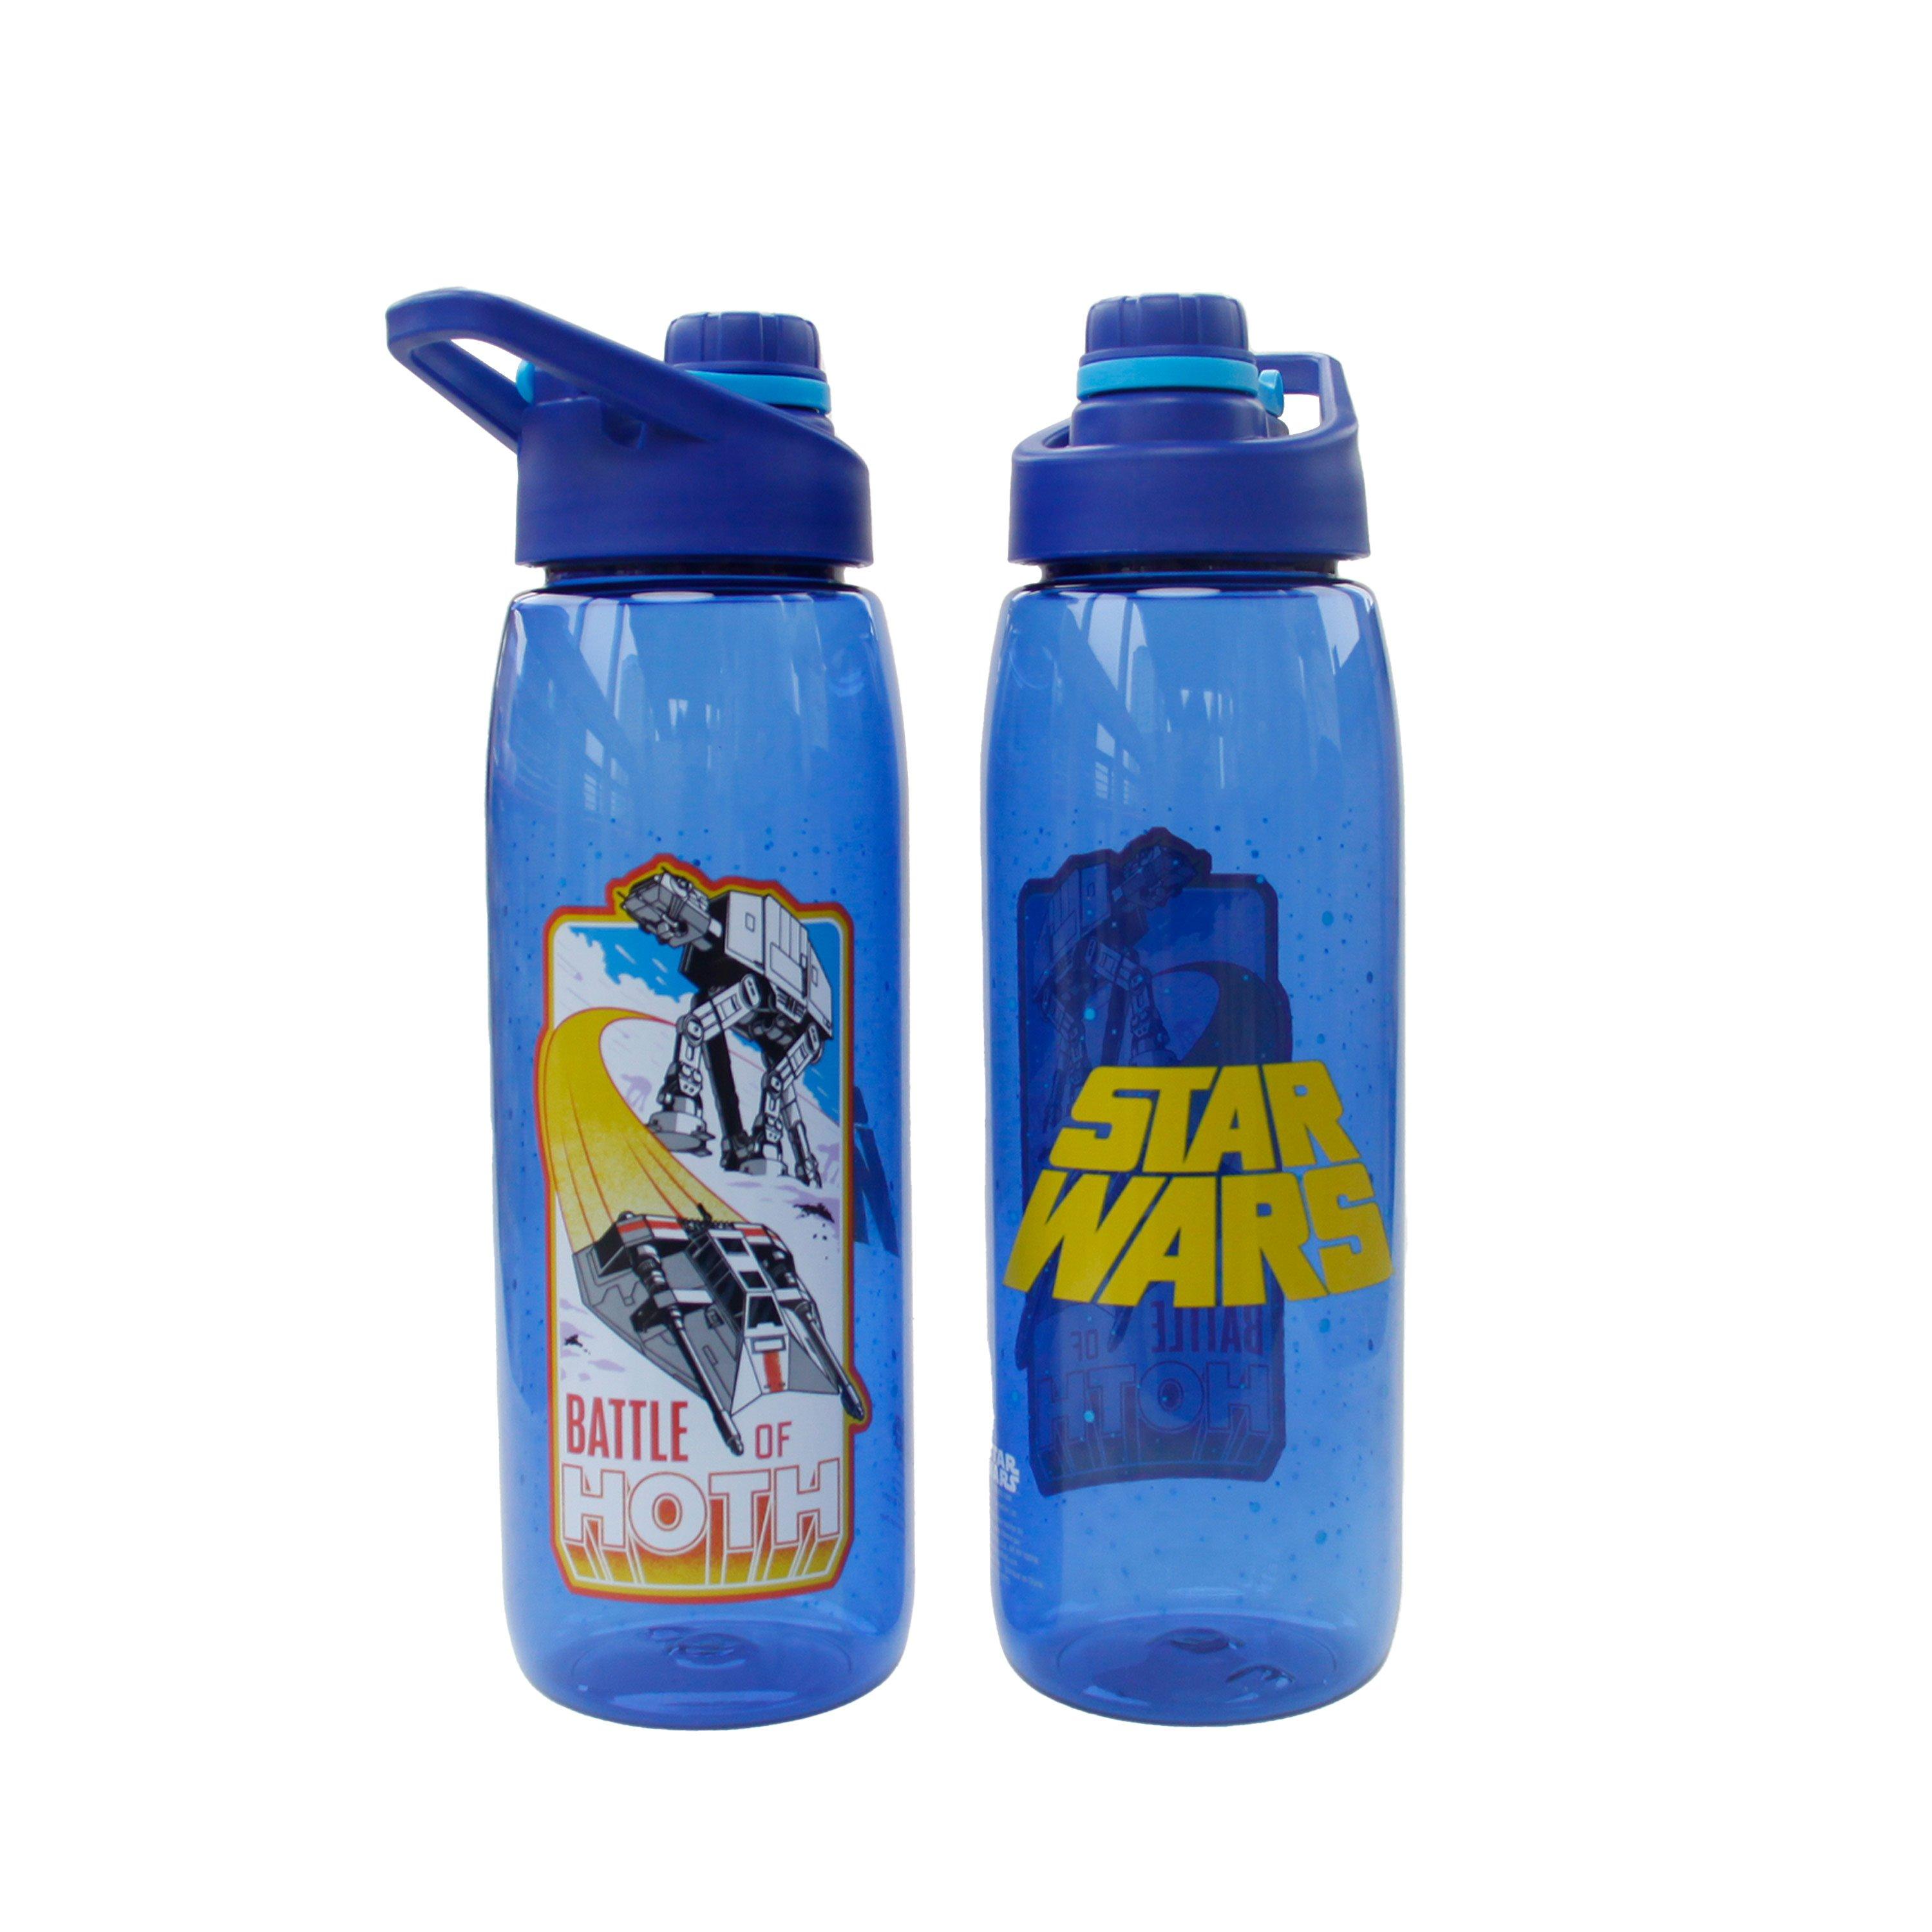 https://media.gamestop.com/i/gamestop/11166332_ALT05/Star-Wars-Vintage-Battle-of-Hoth-28-oz-Water-Bottle-with-Screw-Lid?$pdp$